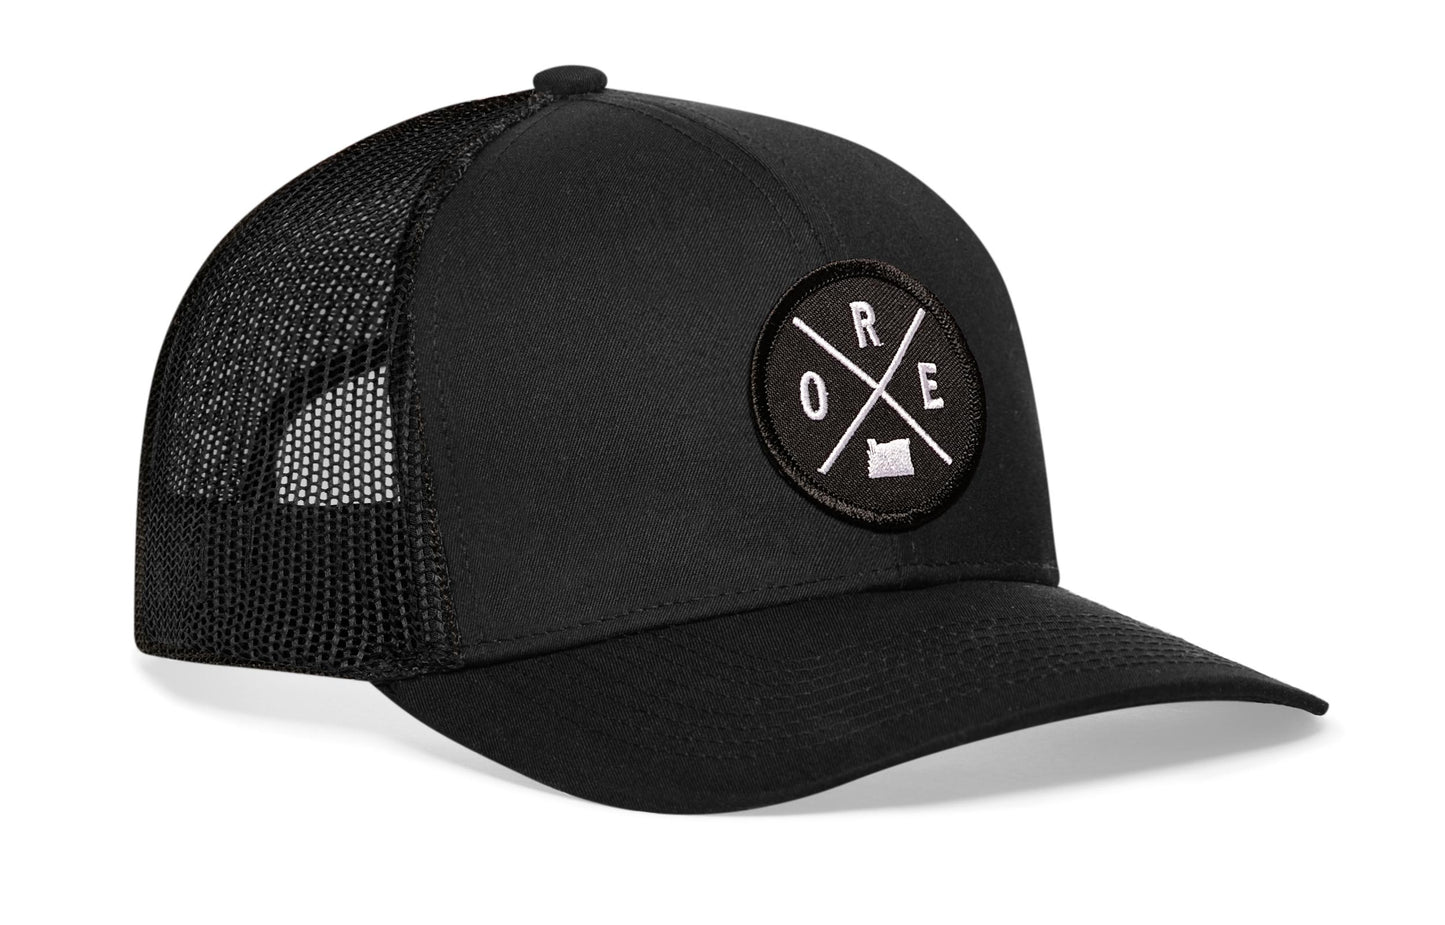 Oregon Trucker Hat  |  Black ORE Snapback